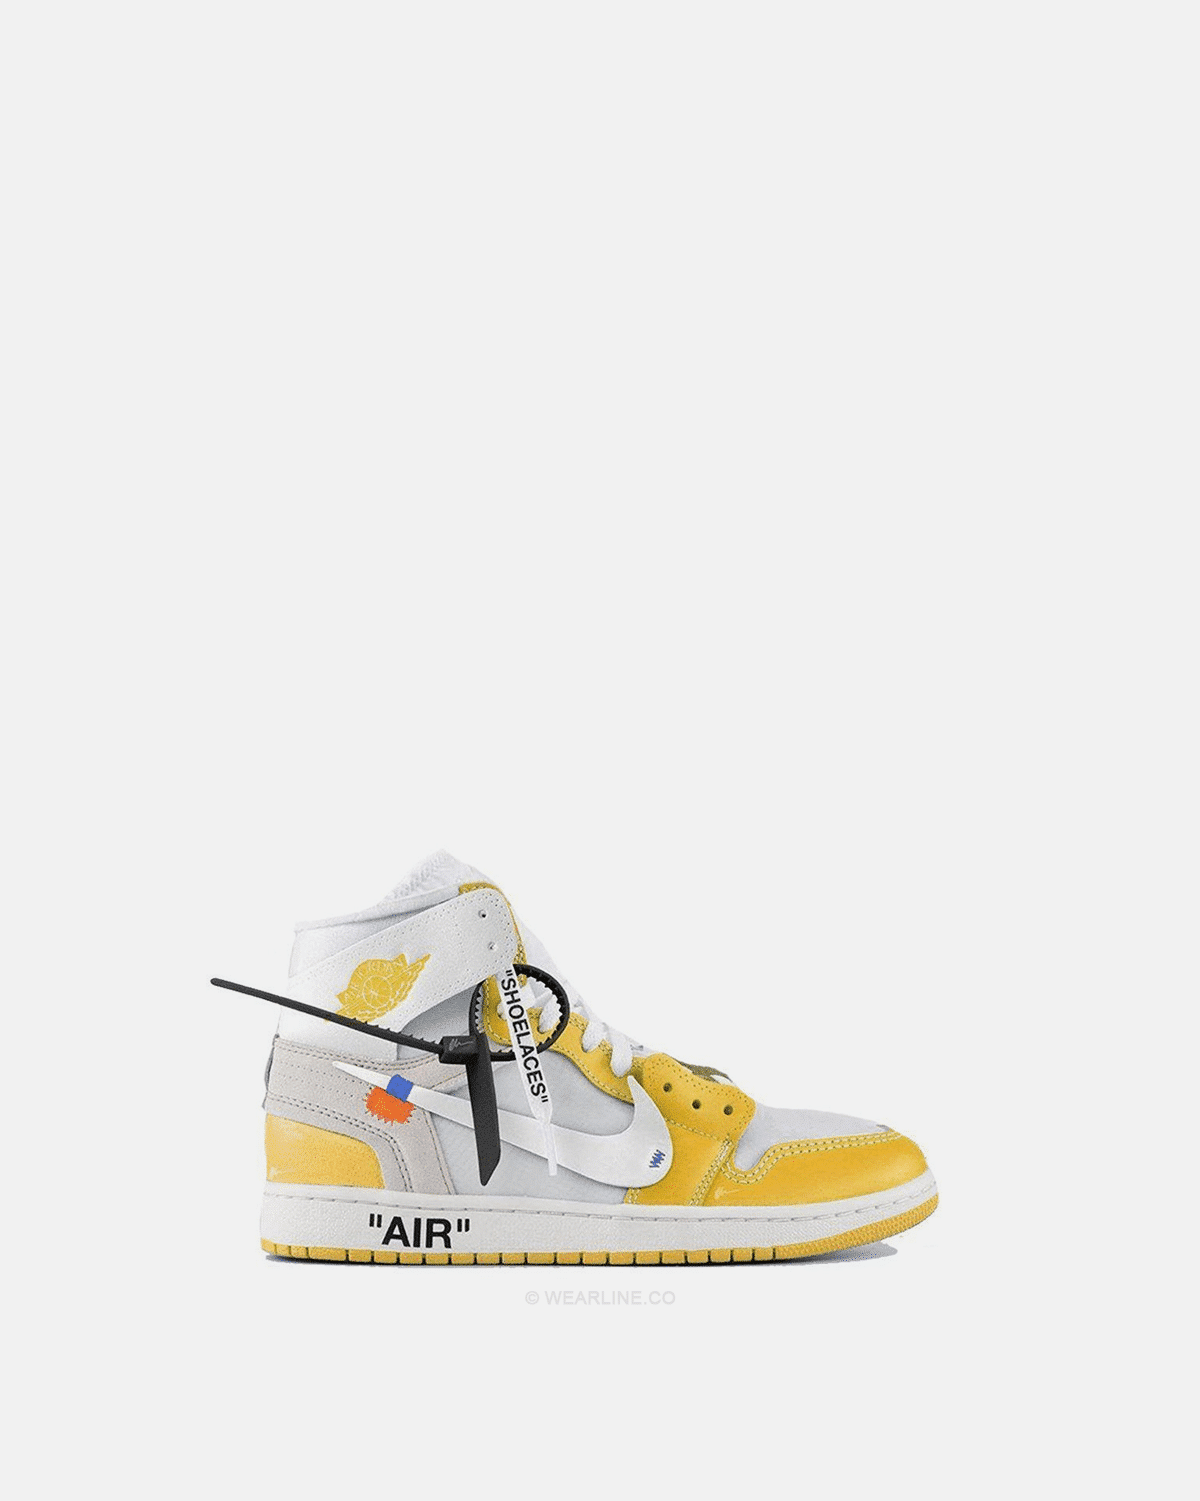 OFF-WHITE x Air Jordan 1 Canary Yellow •